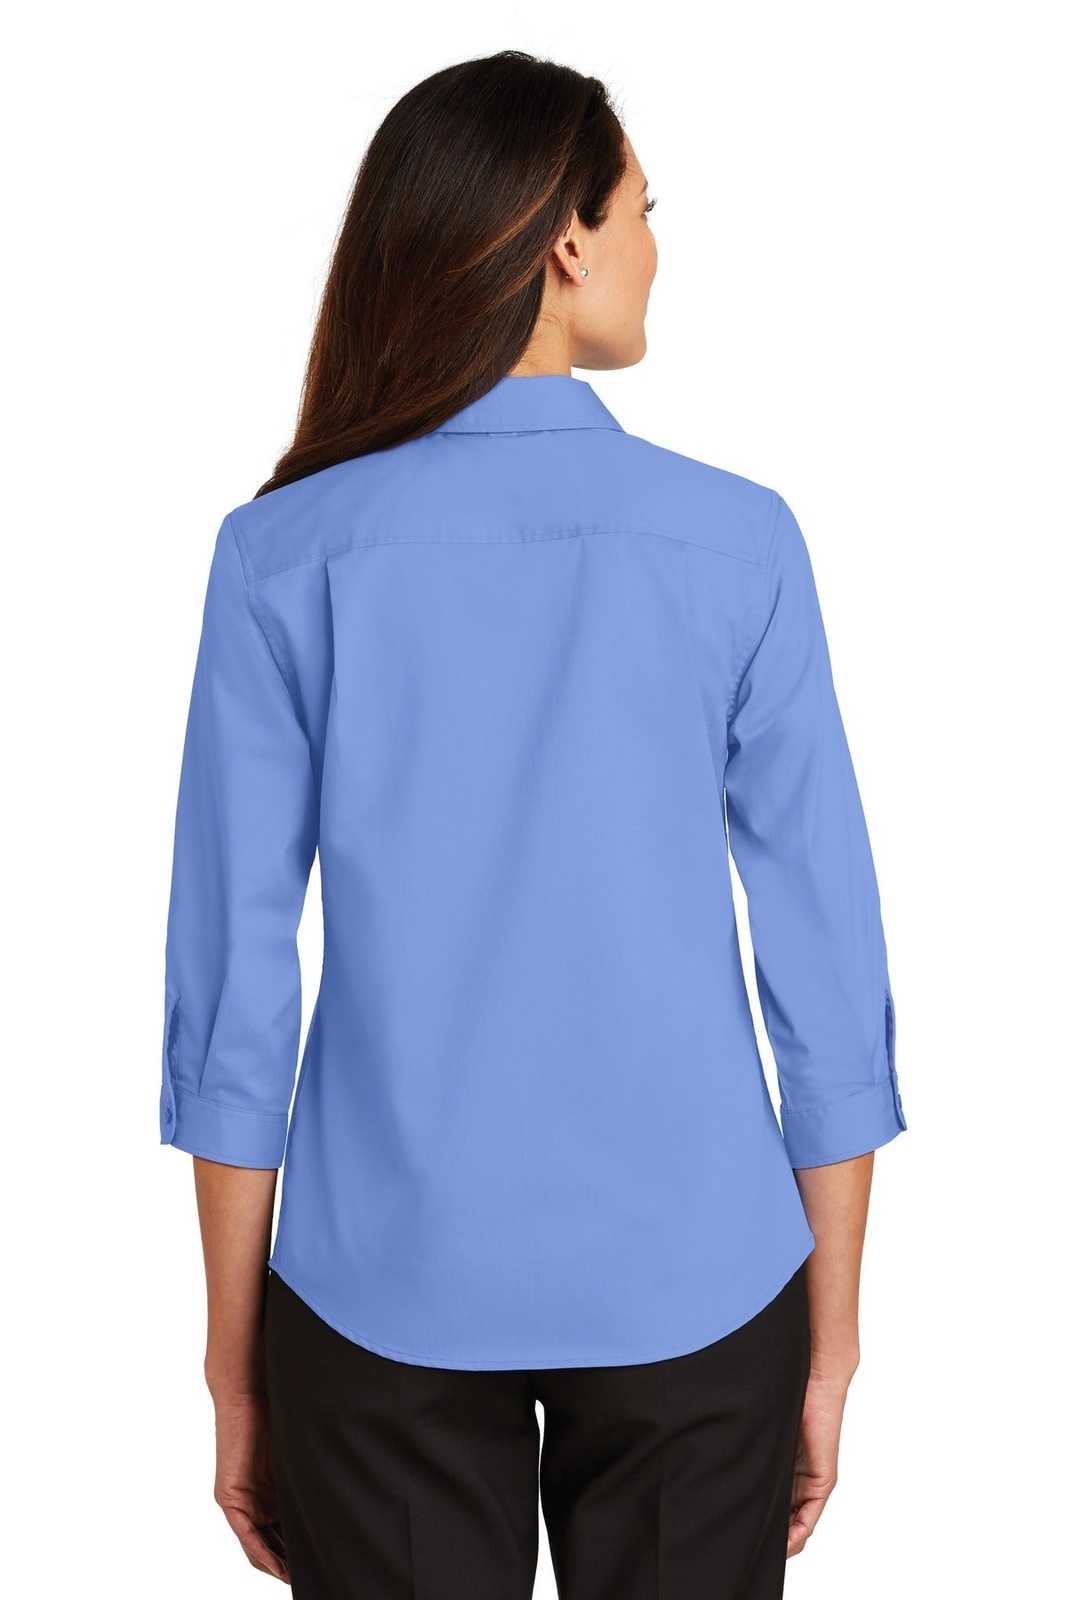 Port Authority L665 Ladies 3/4-Sleeve Superpro Twill Shirt - Ultramarine Blue - HIT a Double - 1